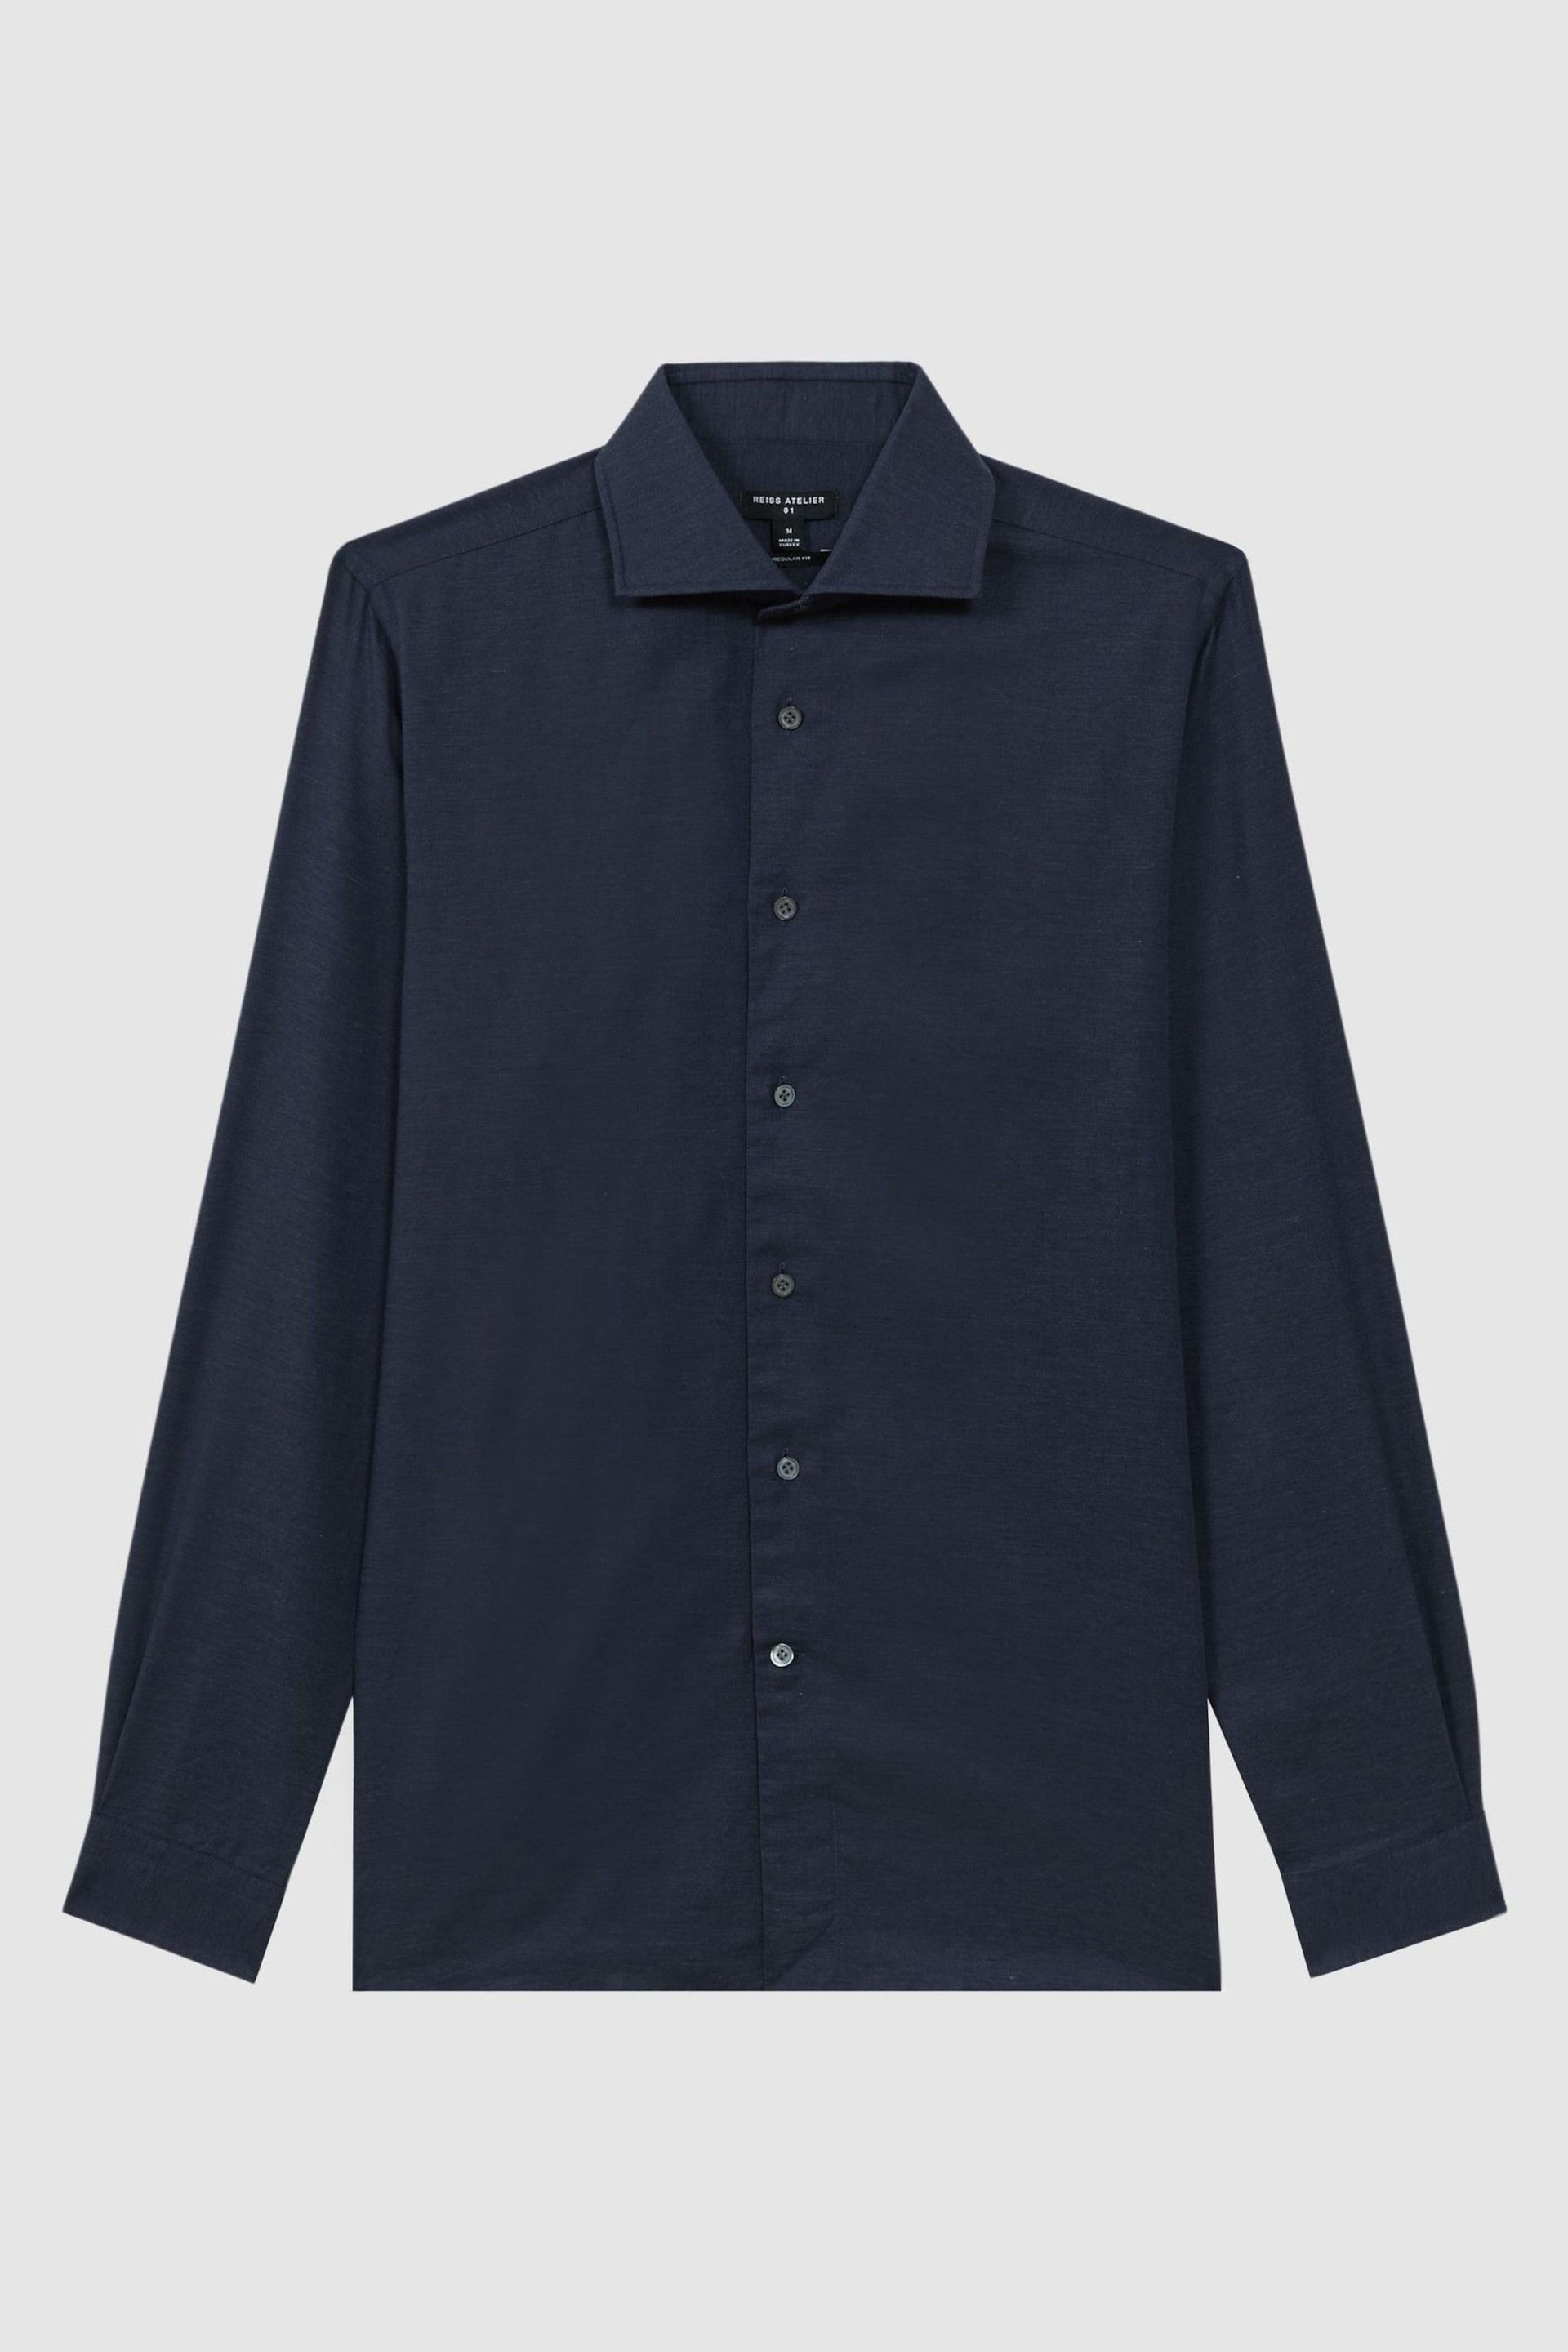 Reiss Navy Croydon Italian Cotton Cashmere Shirt - Image 2 of 6